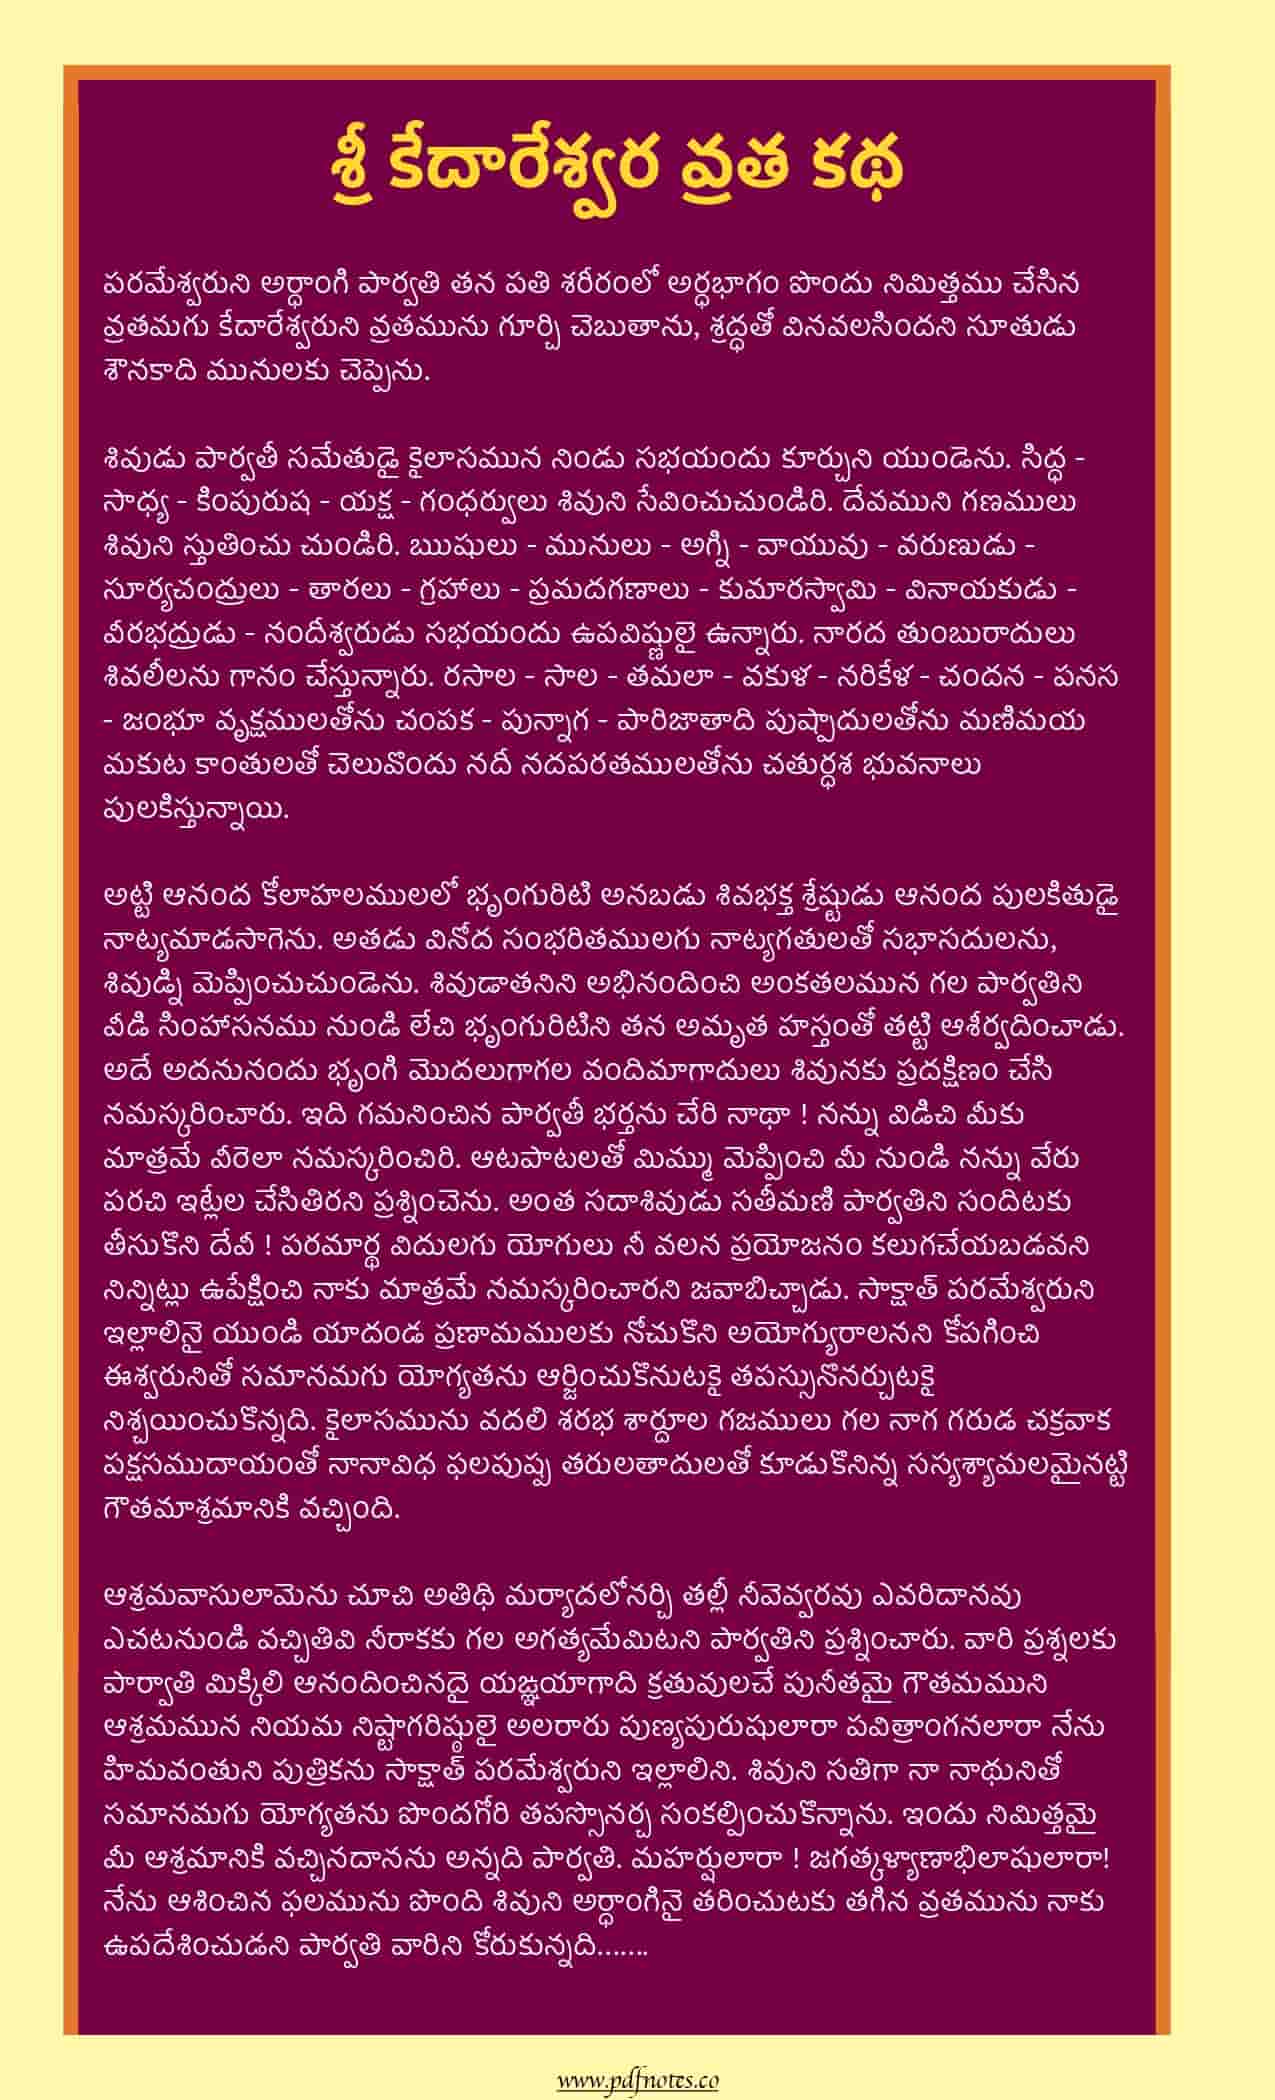 Download PDF of Kedareswara Vratham in Telugu (కేదారేశ్వర వ్రత కల్పము)